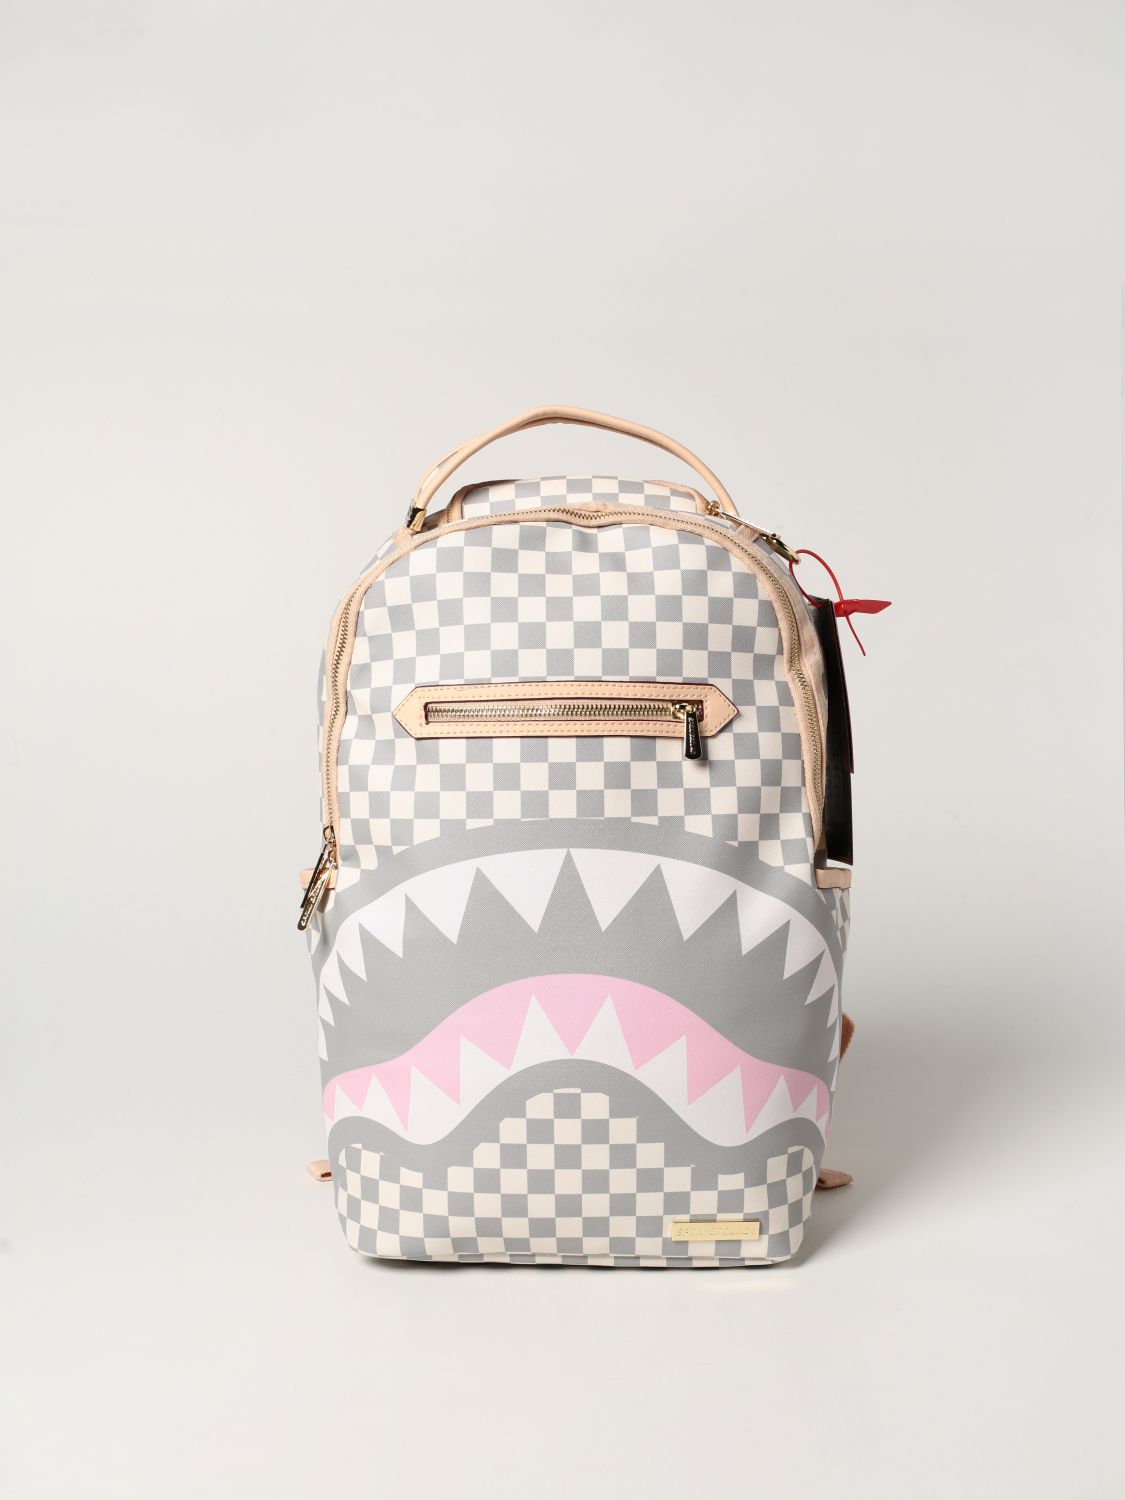 Sprayground Backpack Pink Shark Mouth Black Books Bag BRAND NEW –  Yvonne12785